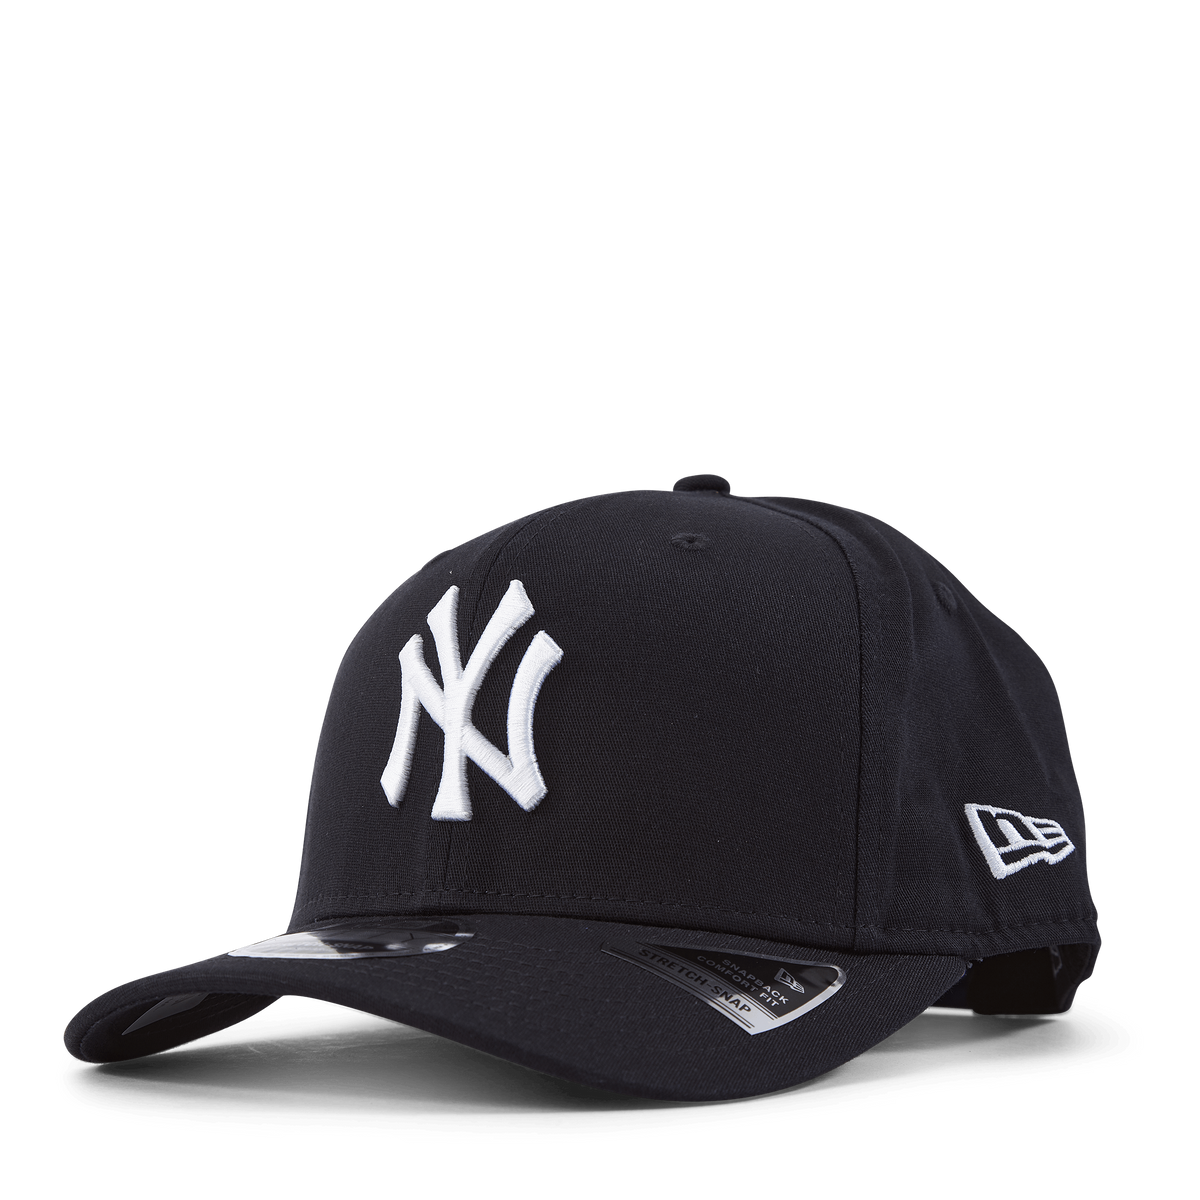 MLB LOGO 950 STSP NEW YORK YANKEES